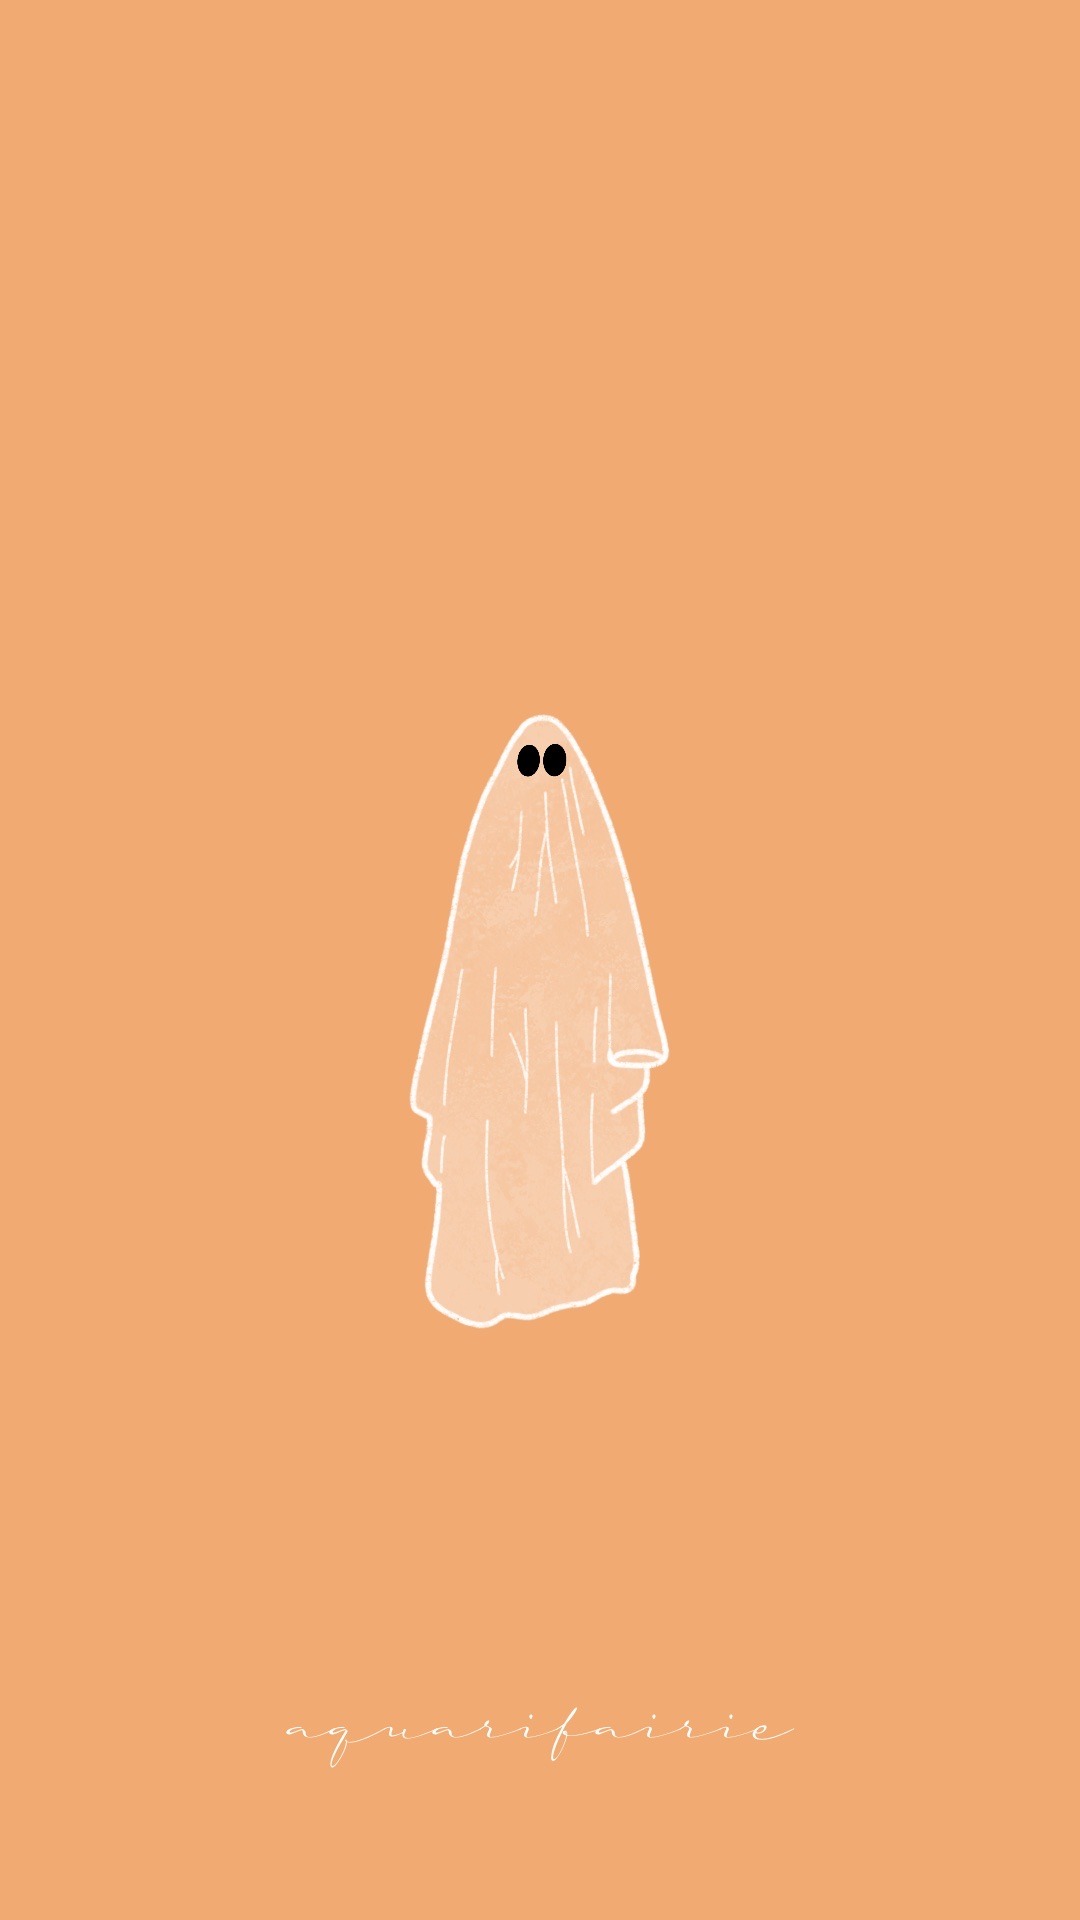 Cute Ghost Wallpaper Images  Free Download on Freepik